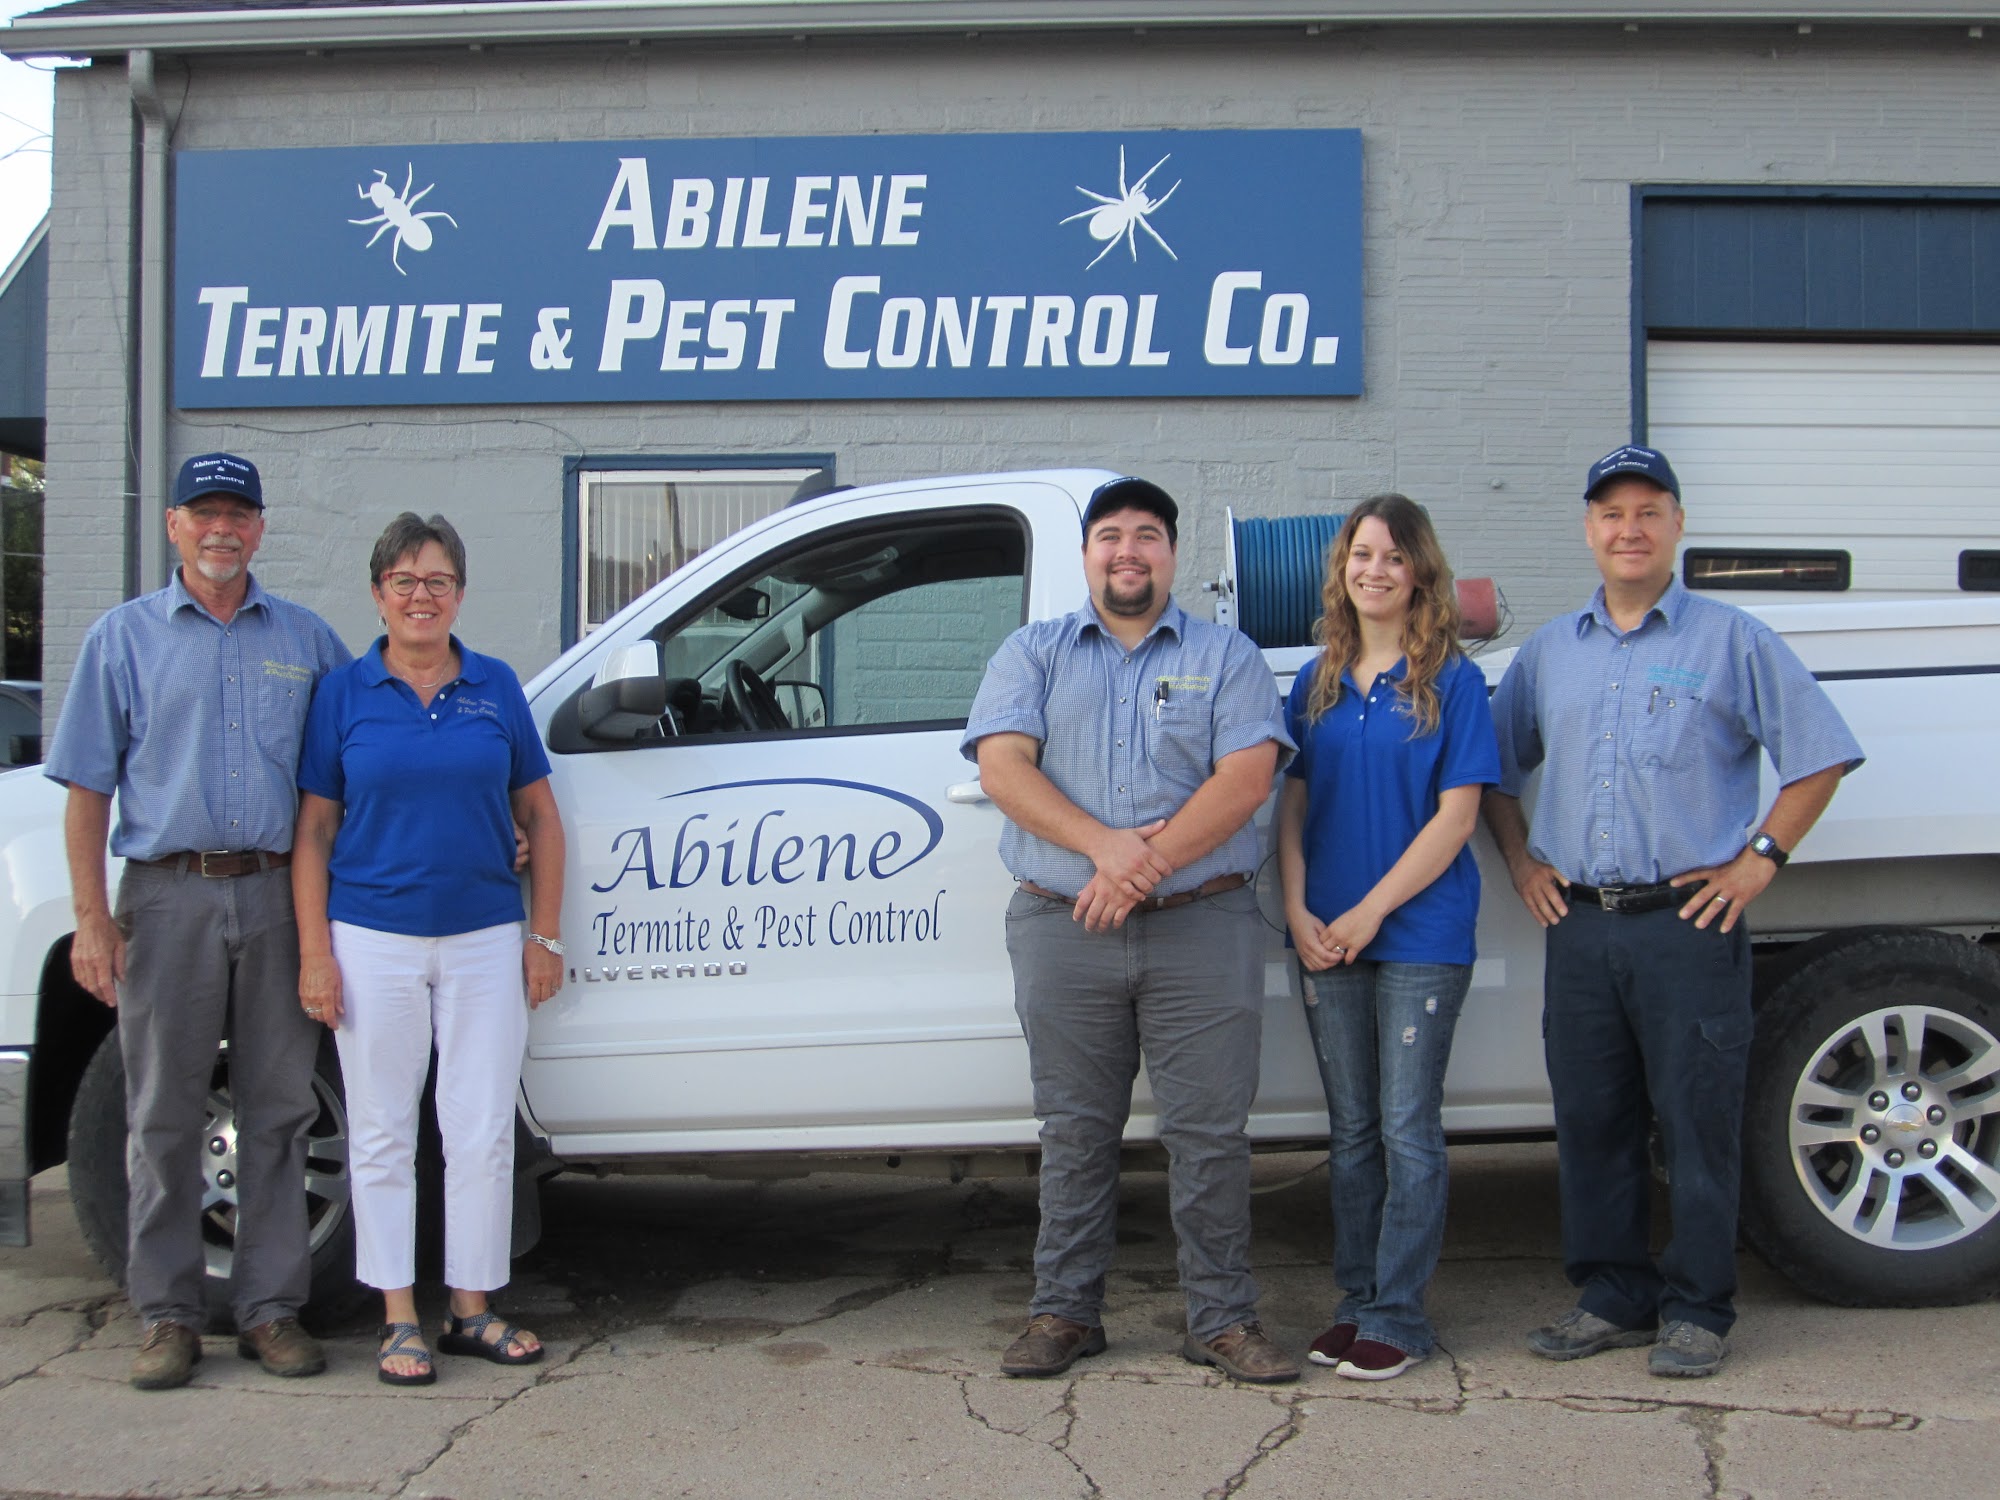 Abilene Termite & Pest Control 106 N Spruce St, Abilene Kansas 67410